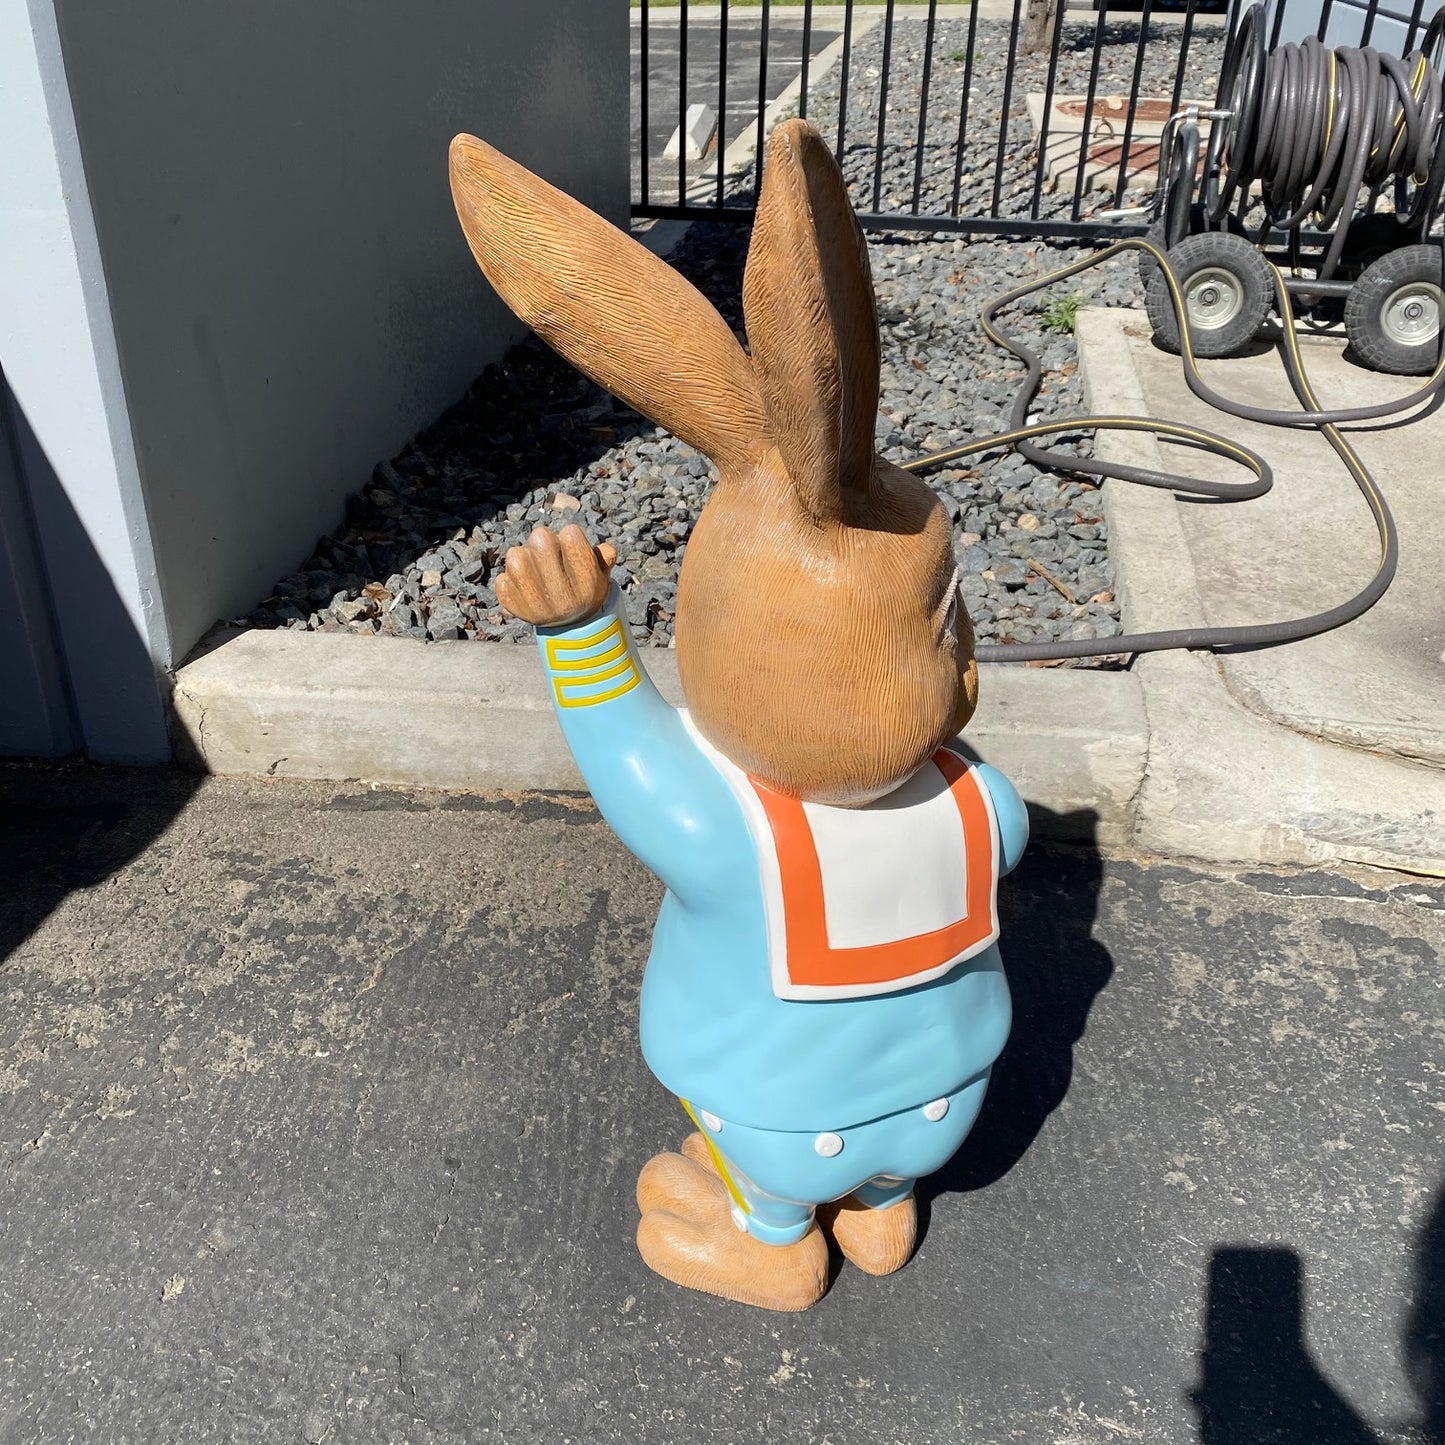 Rabbit Boy Statue